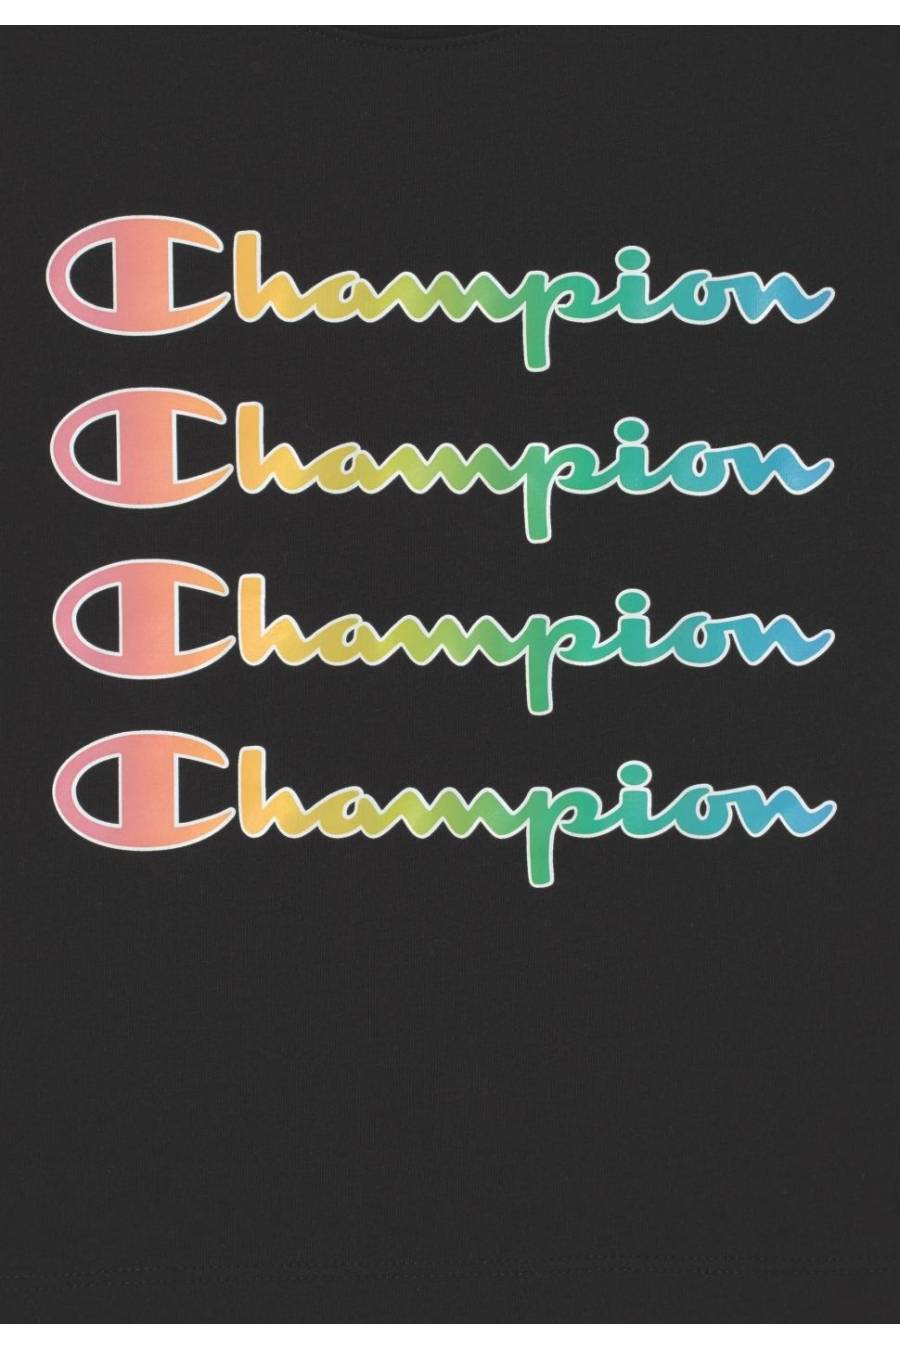 Camiseta Champion Cropped - 404132-KK001 - Msdsport by Masdeporte